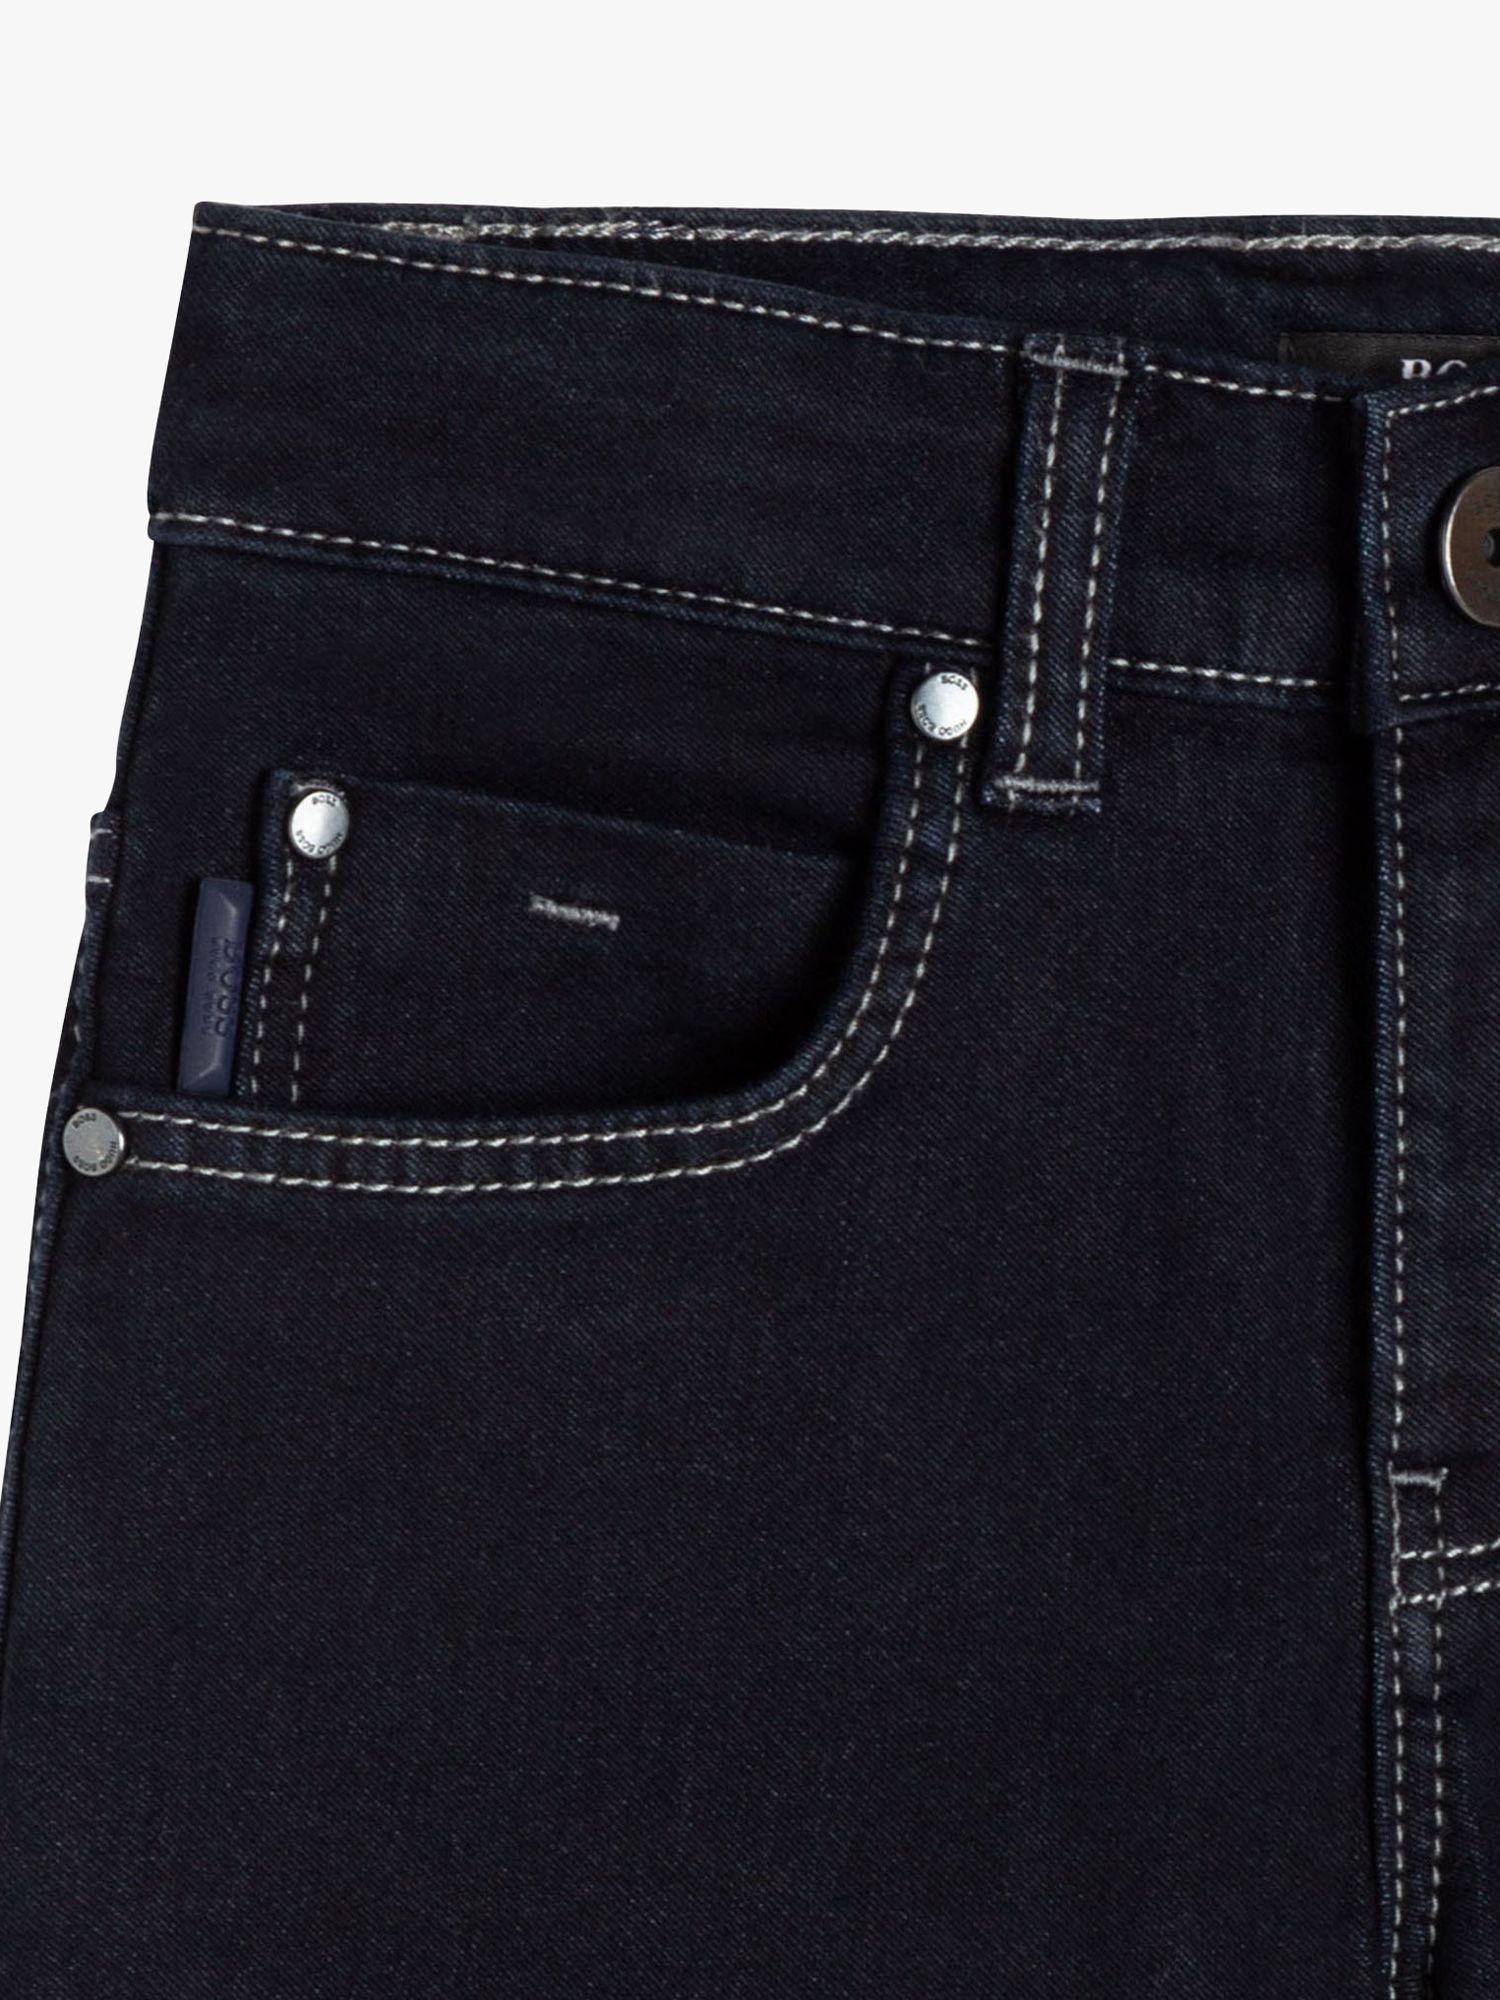 HUGO BOSS Boy's Waist Adjustable Plain Denim Jeans, Rinse Wash, 6-9 months